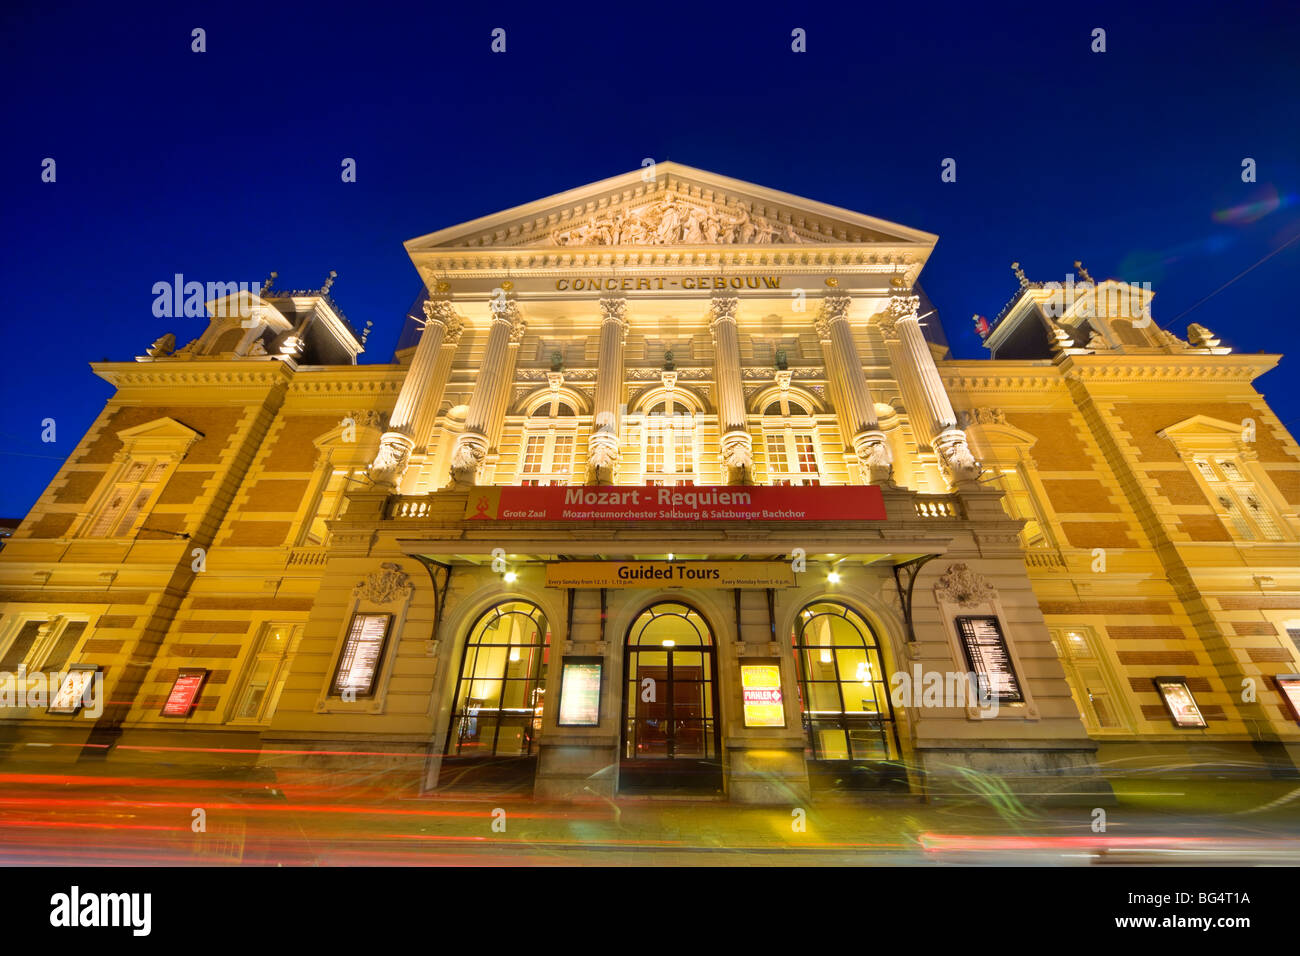 Amsterdam The Concertgebouw, Concert Gebouw, Music Hall building at dusk Stock Photo